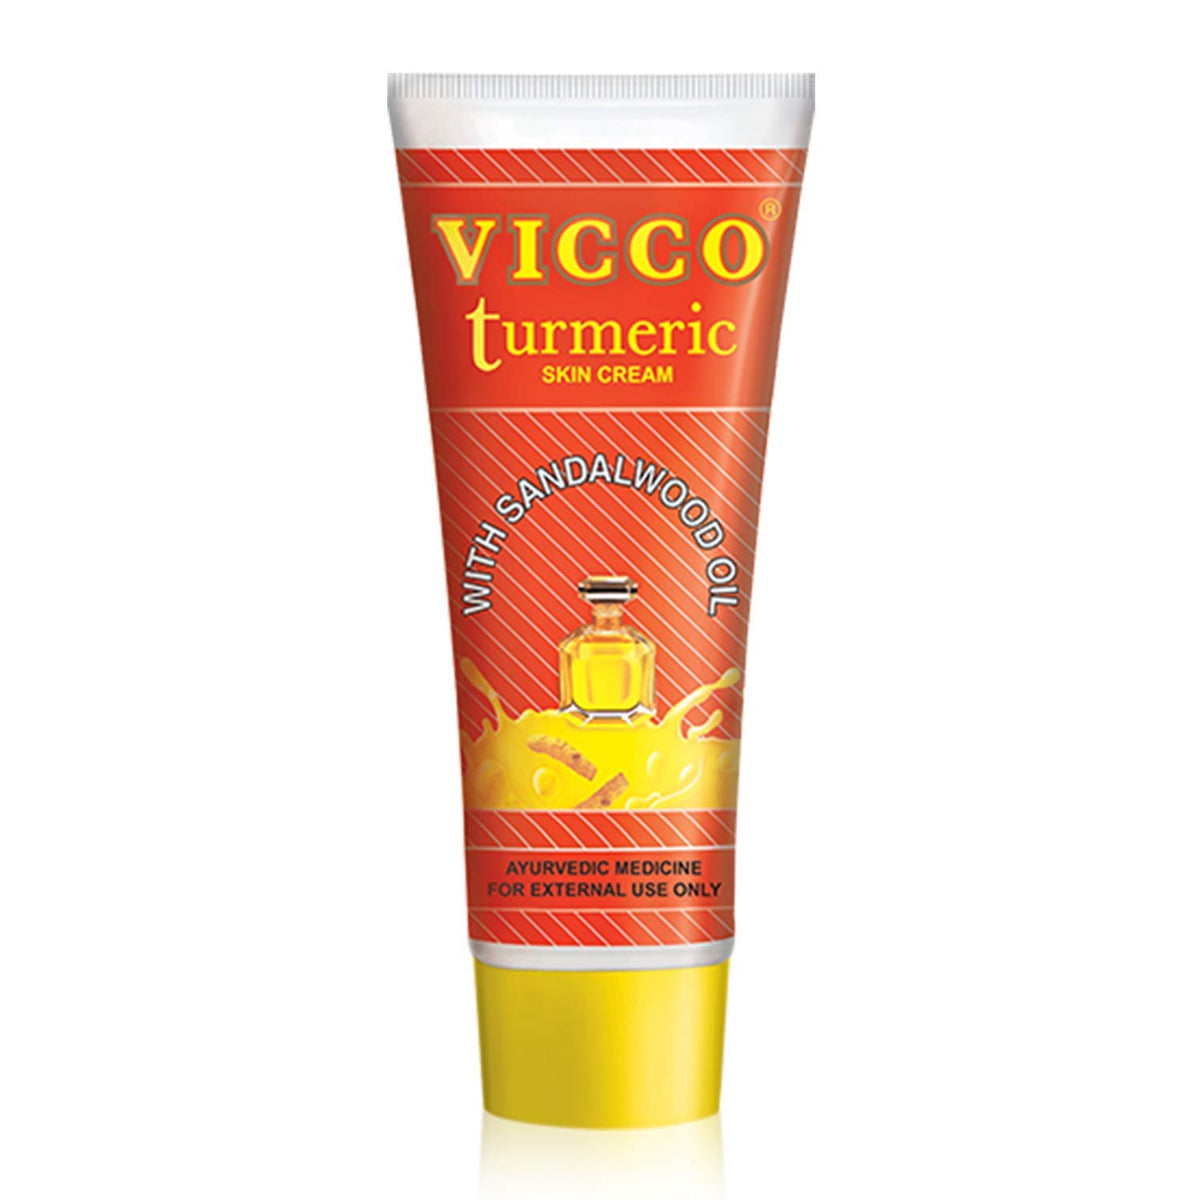 Vicco Ayurvedic Turmeric With Sandalwood Oil Skin Cream